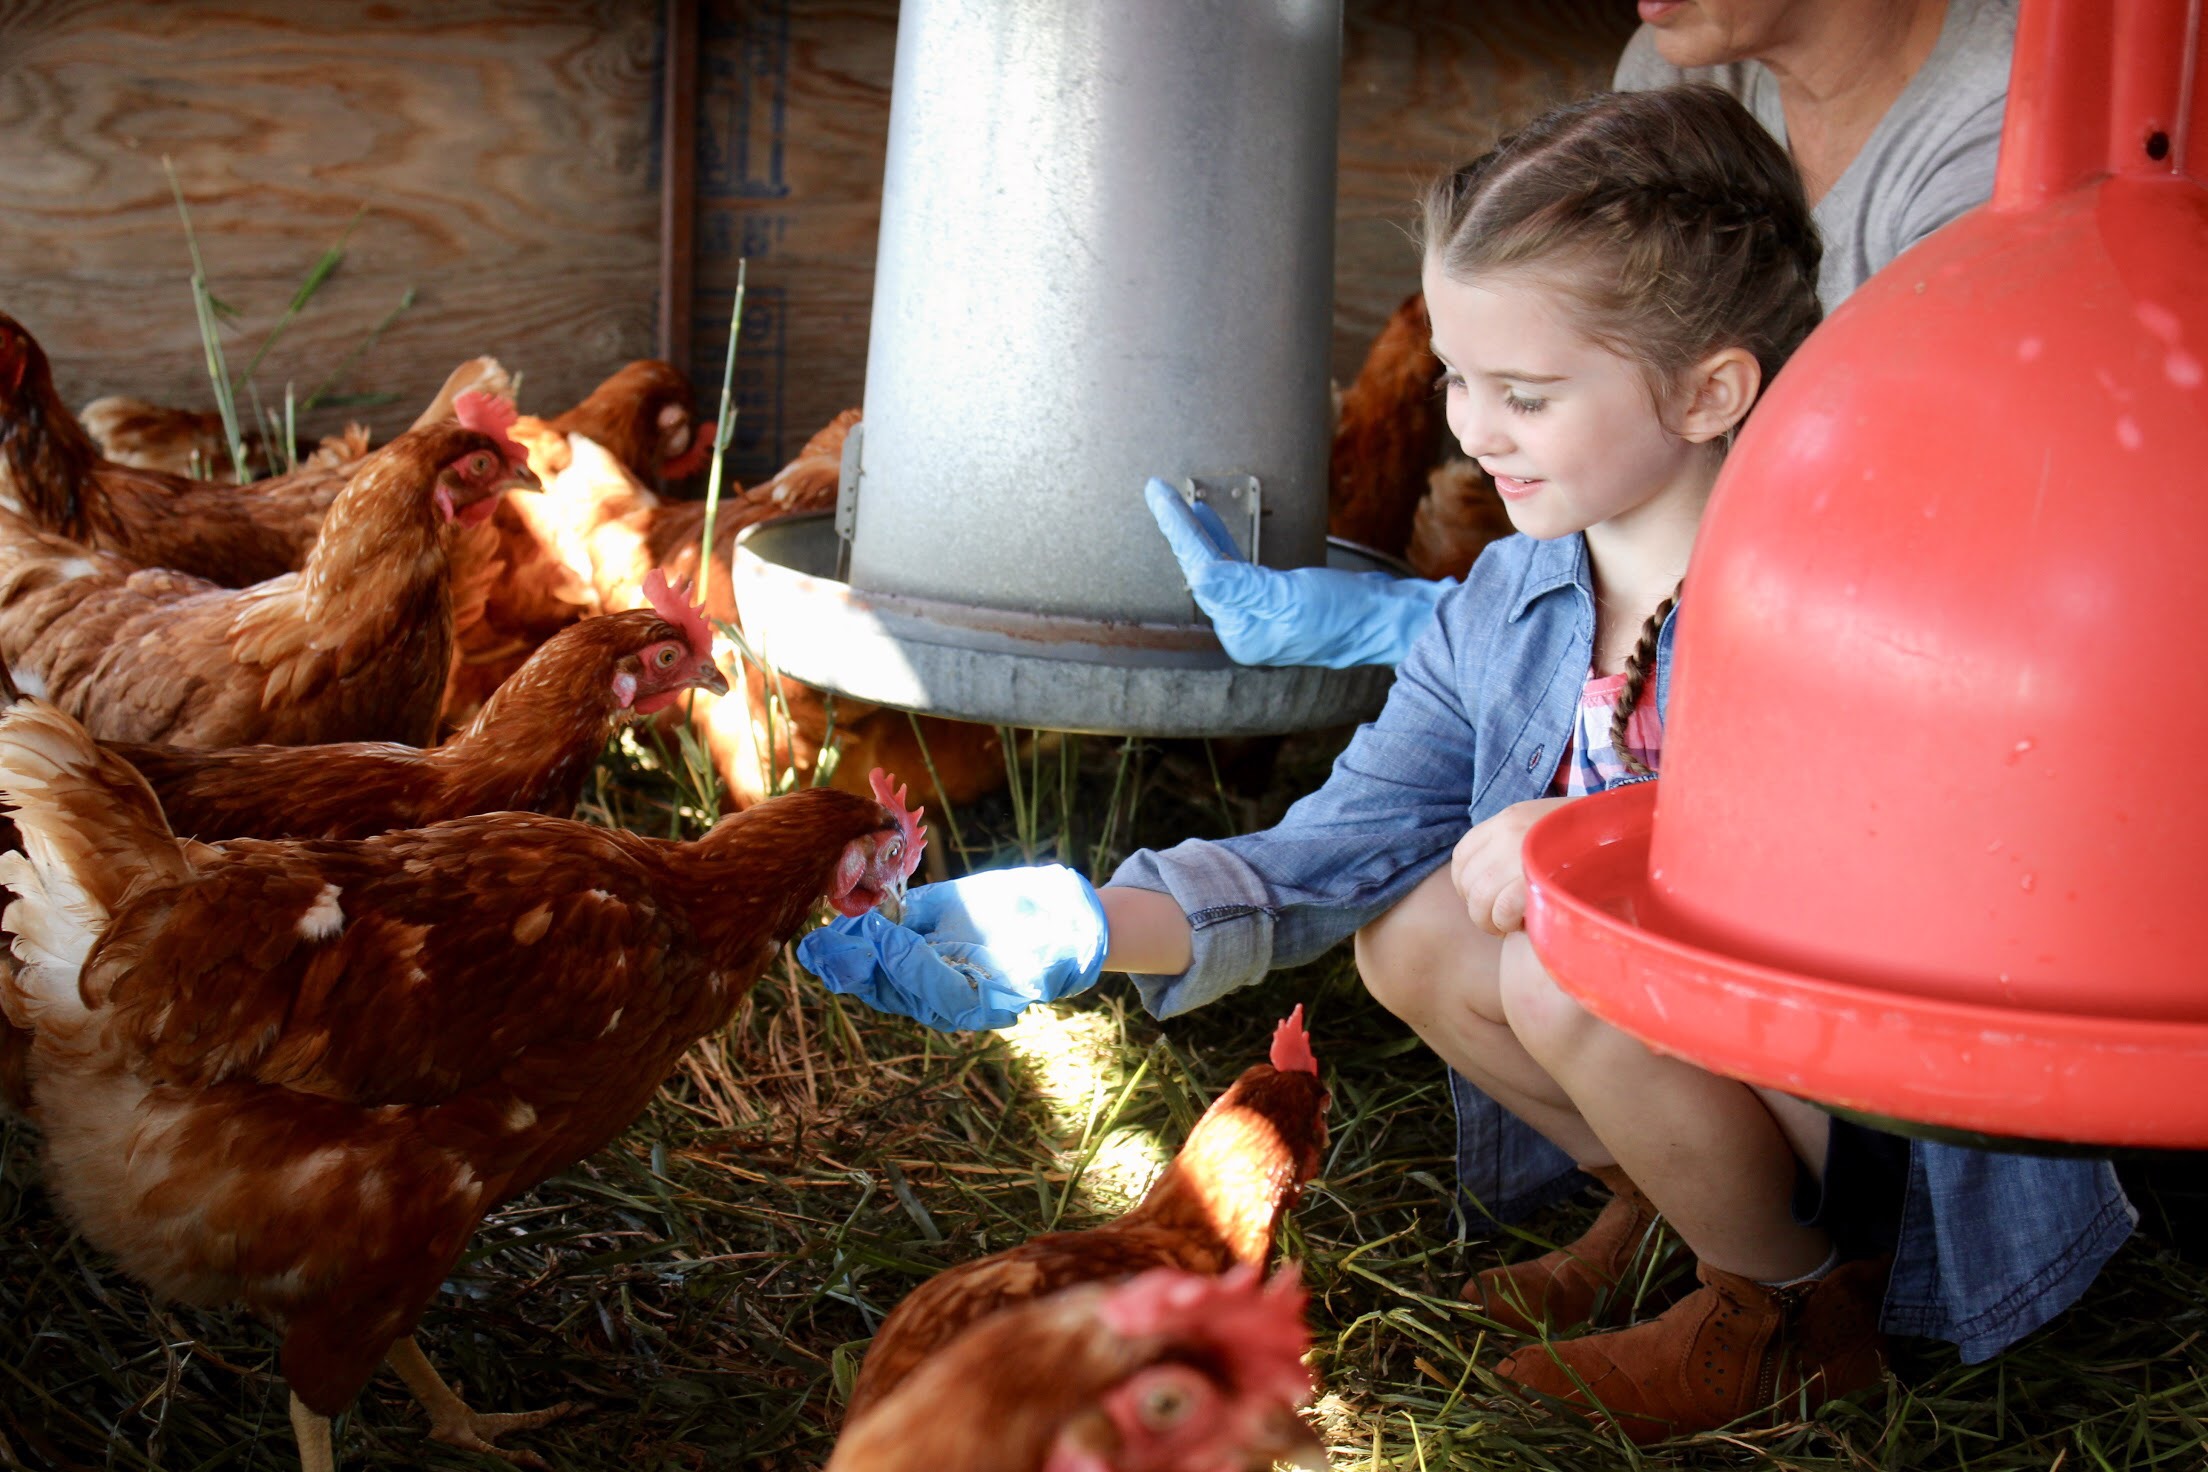 Sunworks Farm: Home to Happy Hens